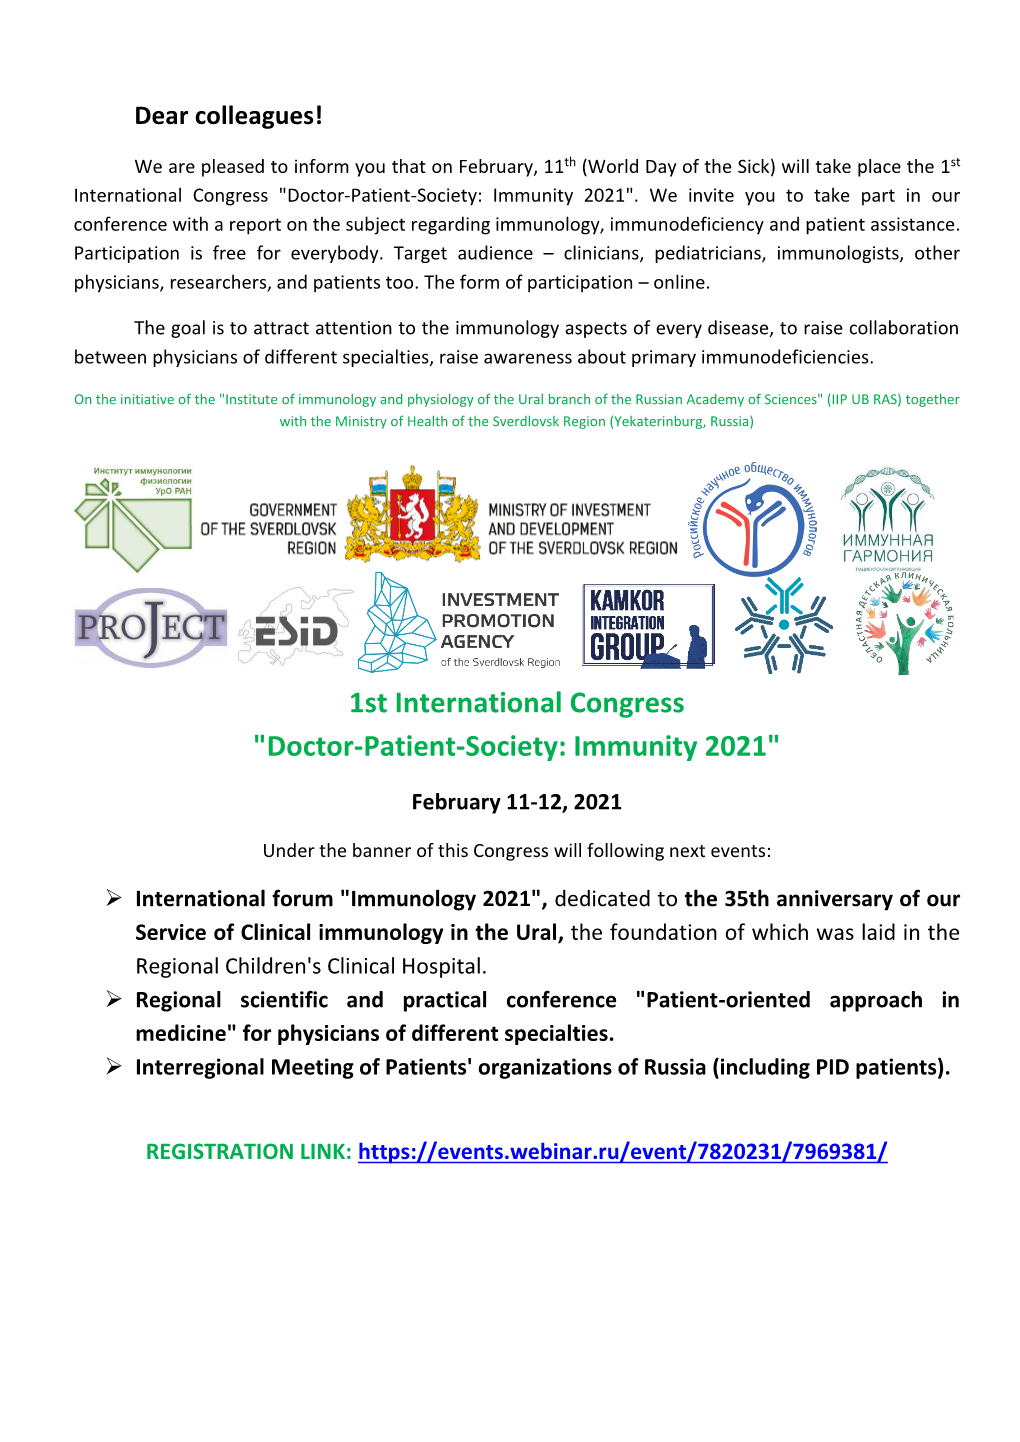 1St International Congress "Doctor-Patient-Society: Immunity 2021"